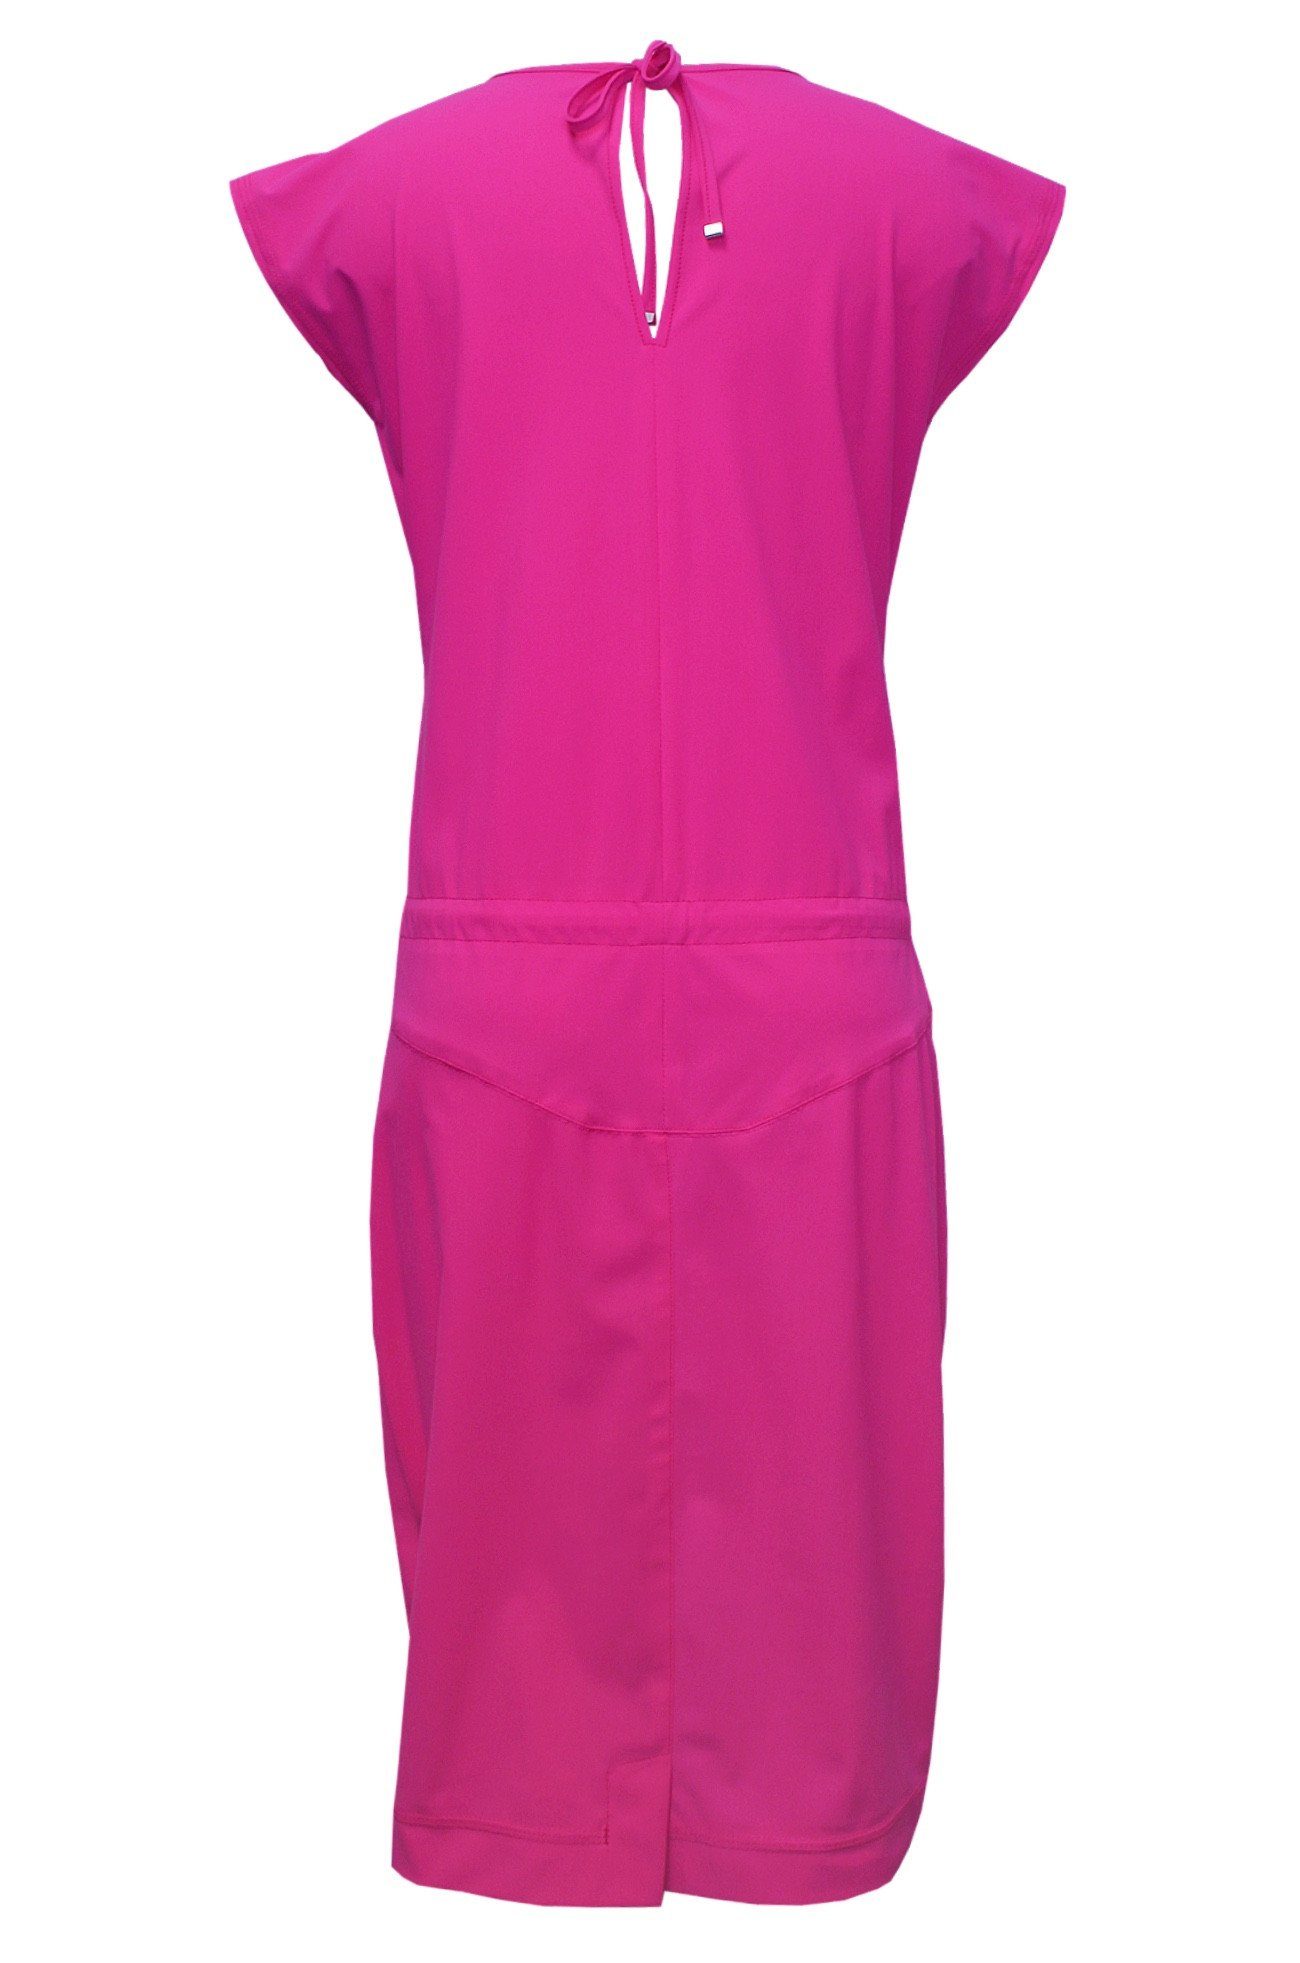 Raffaello Rossi Sommerkleid Dress pink Gira S